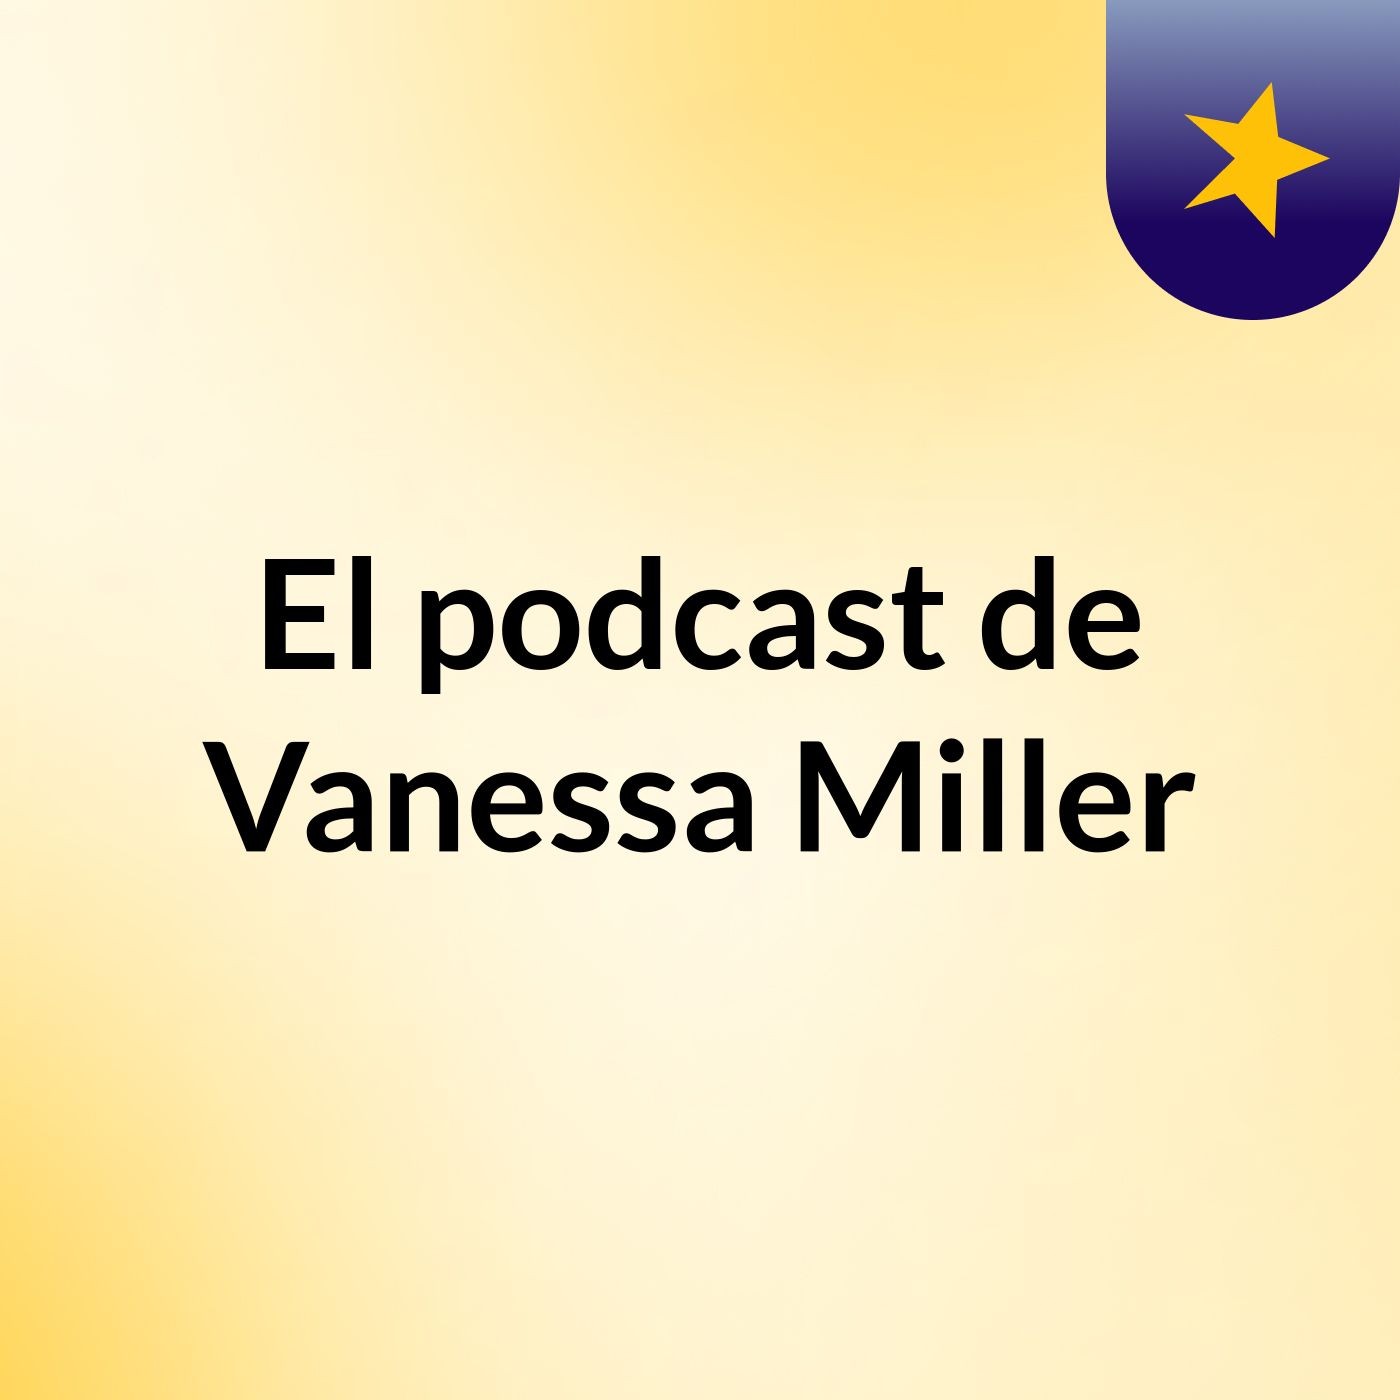 El podcast de Vanessa Miller